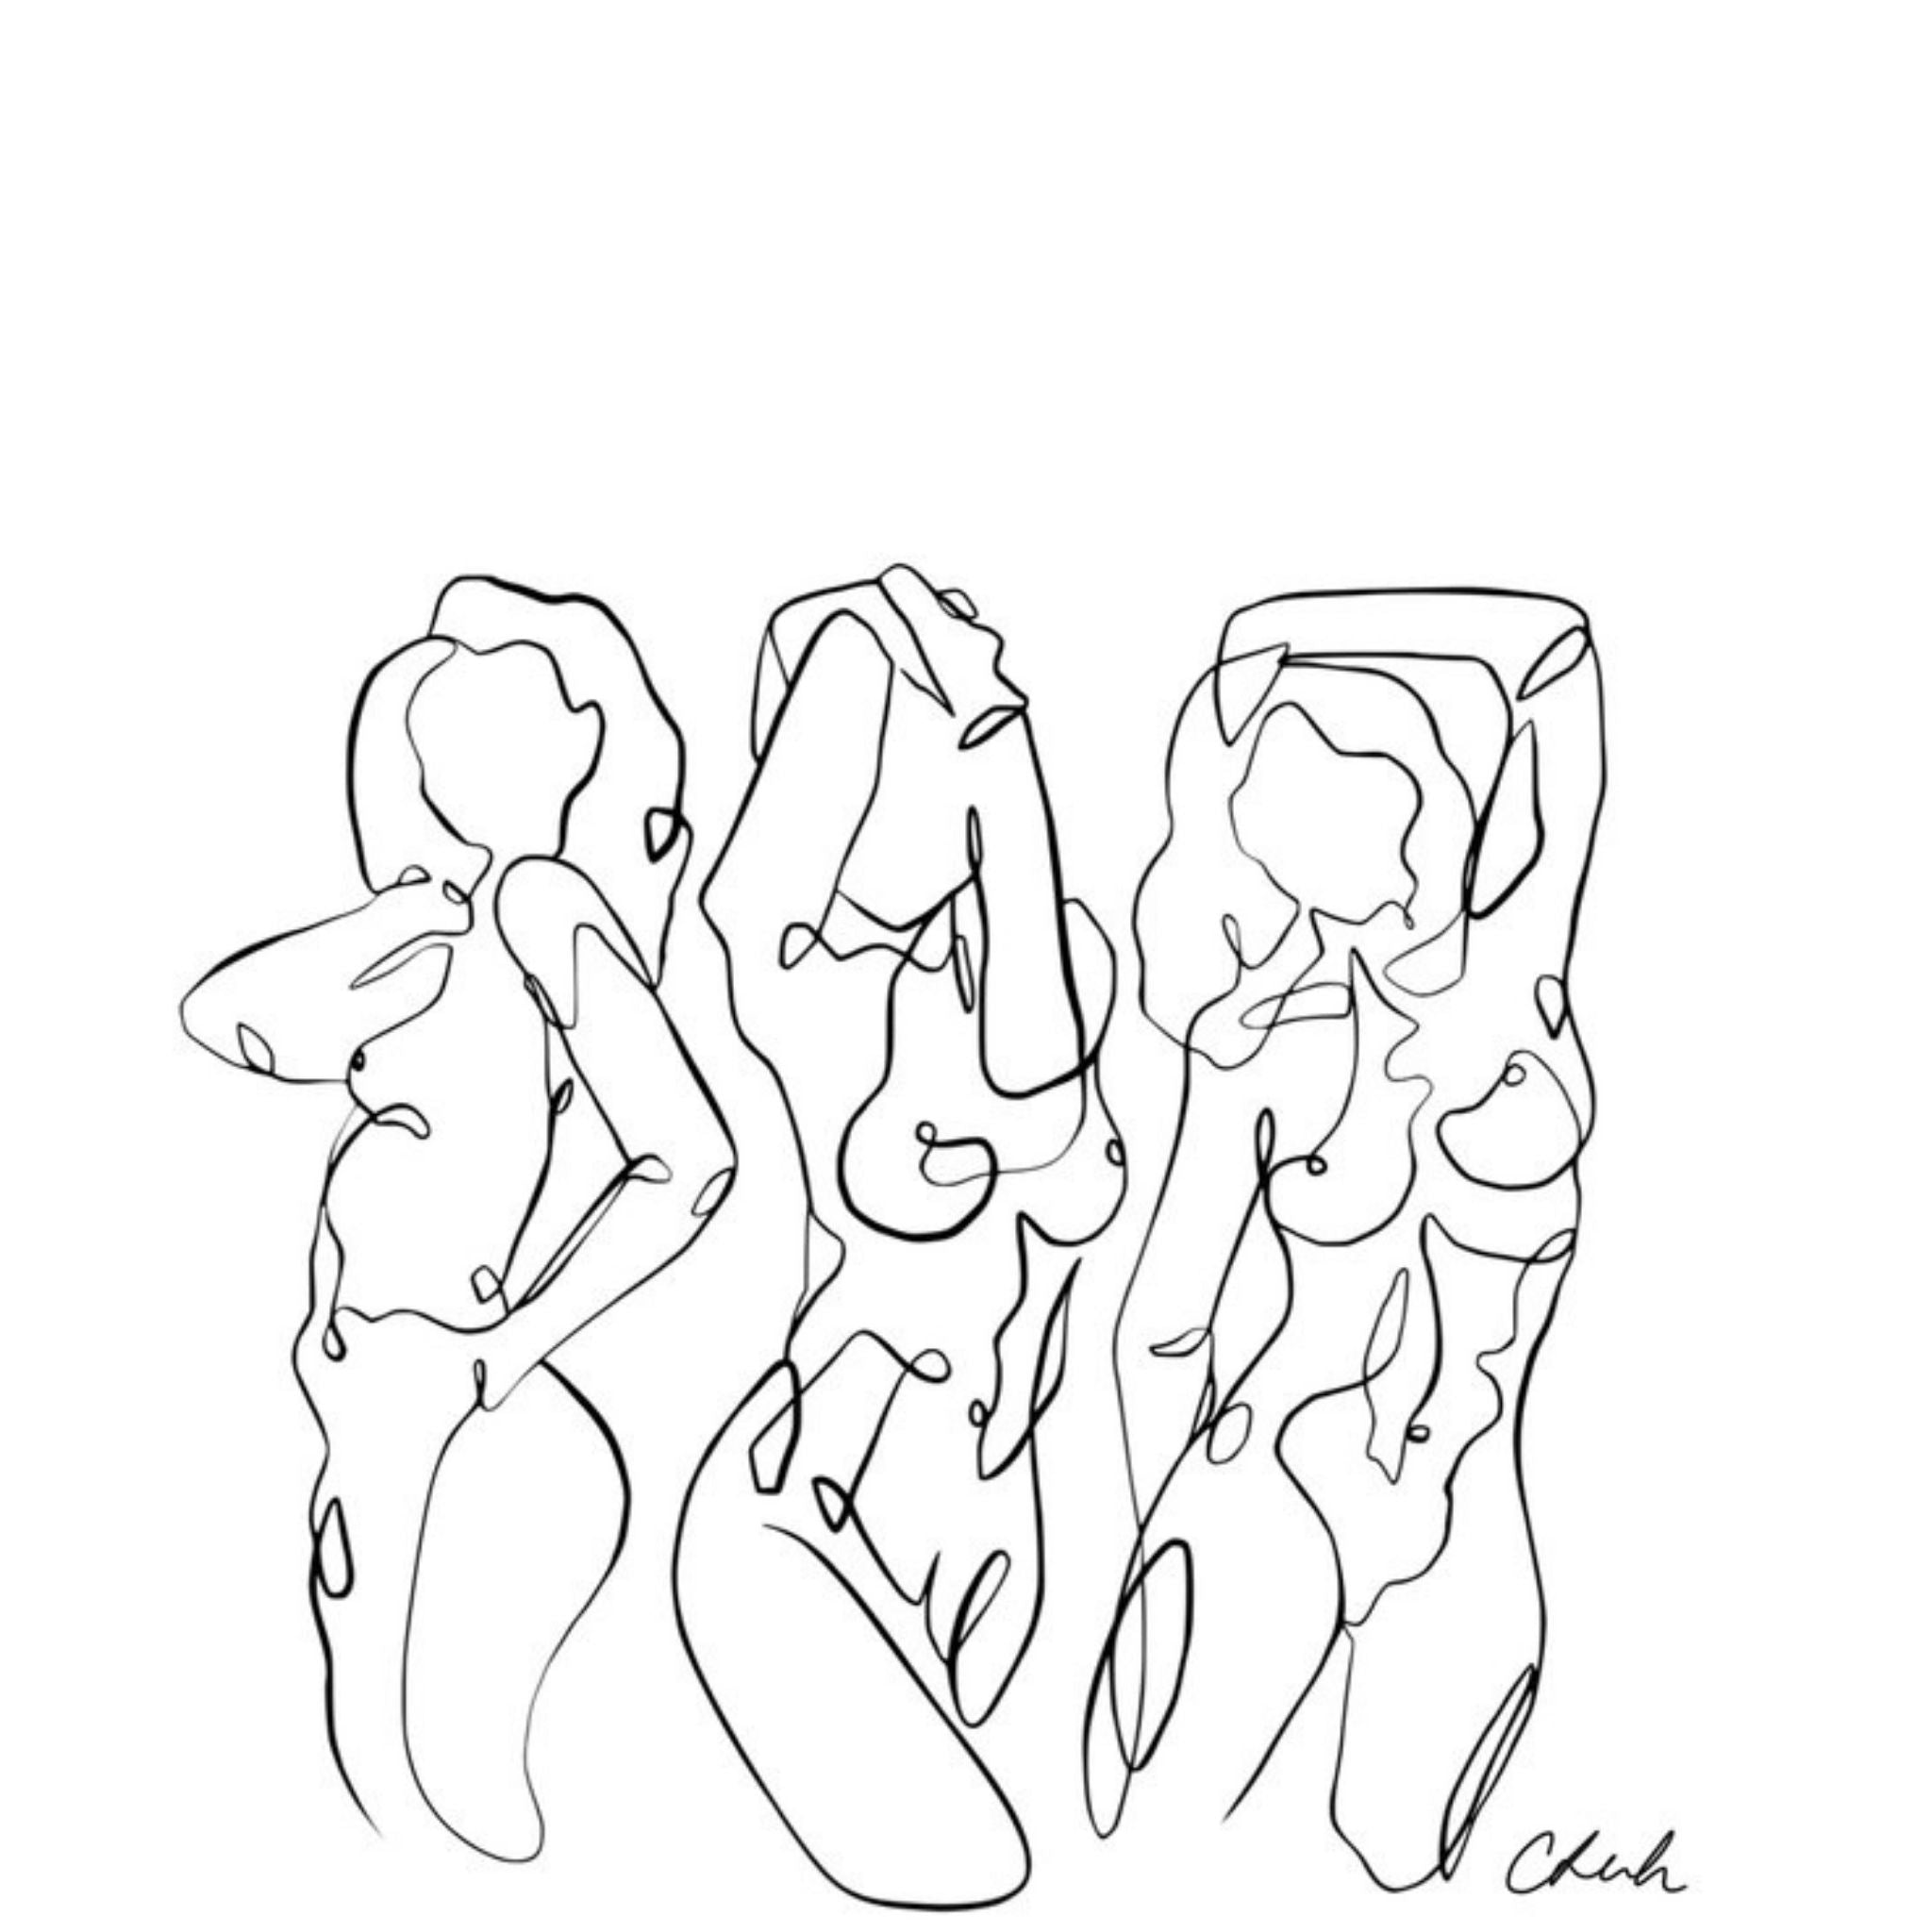 3 women minimalist print art line drawing nude